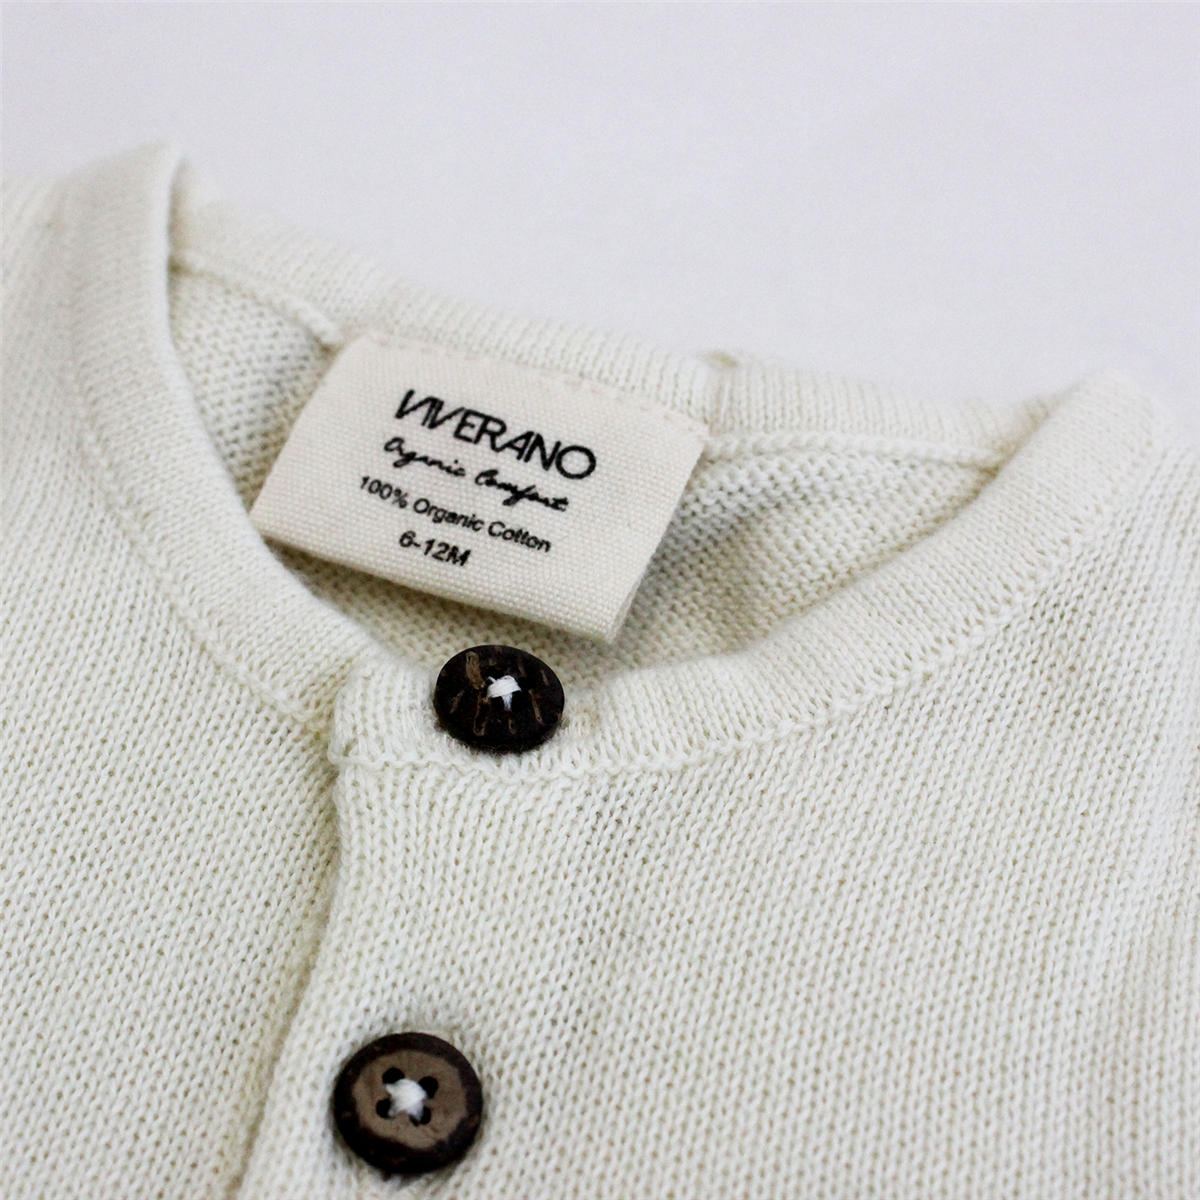 Viverano Organic Cotton Sweater knit Kangaroo Coverall Romper - Cream